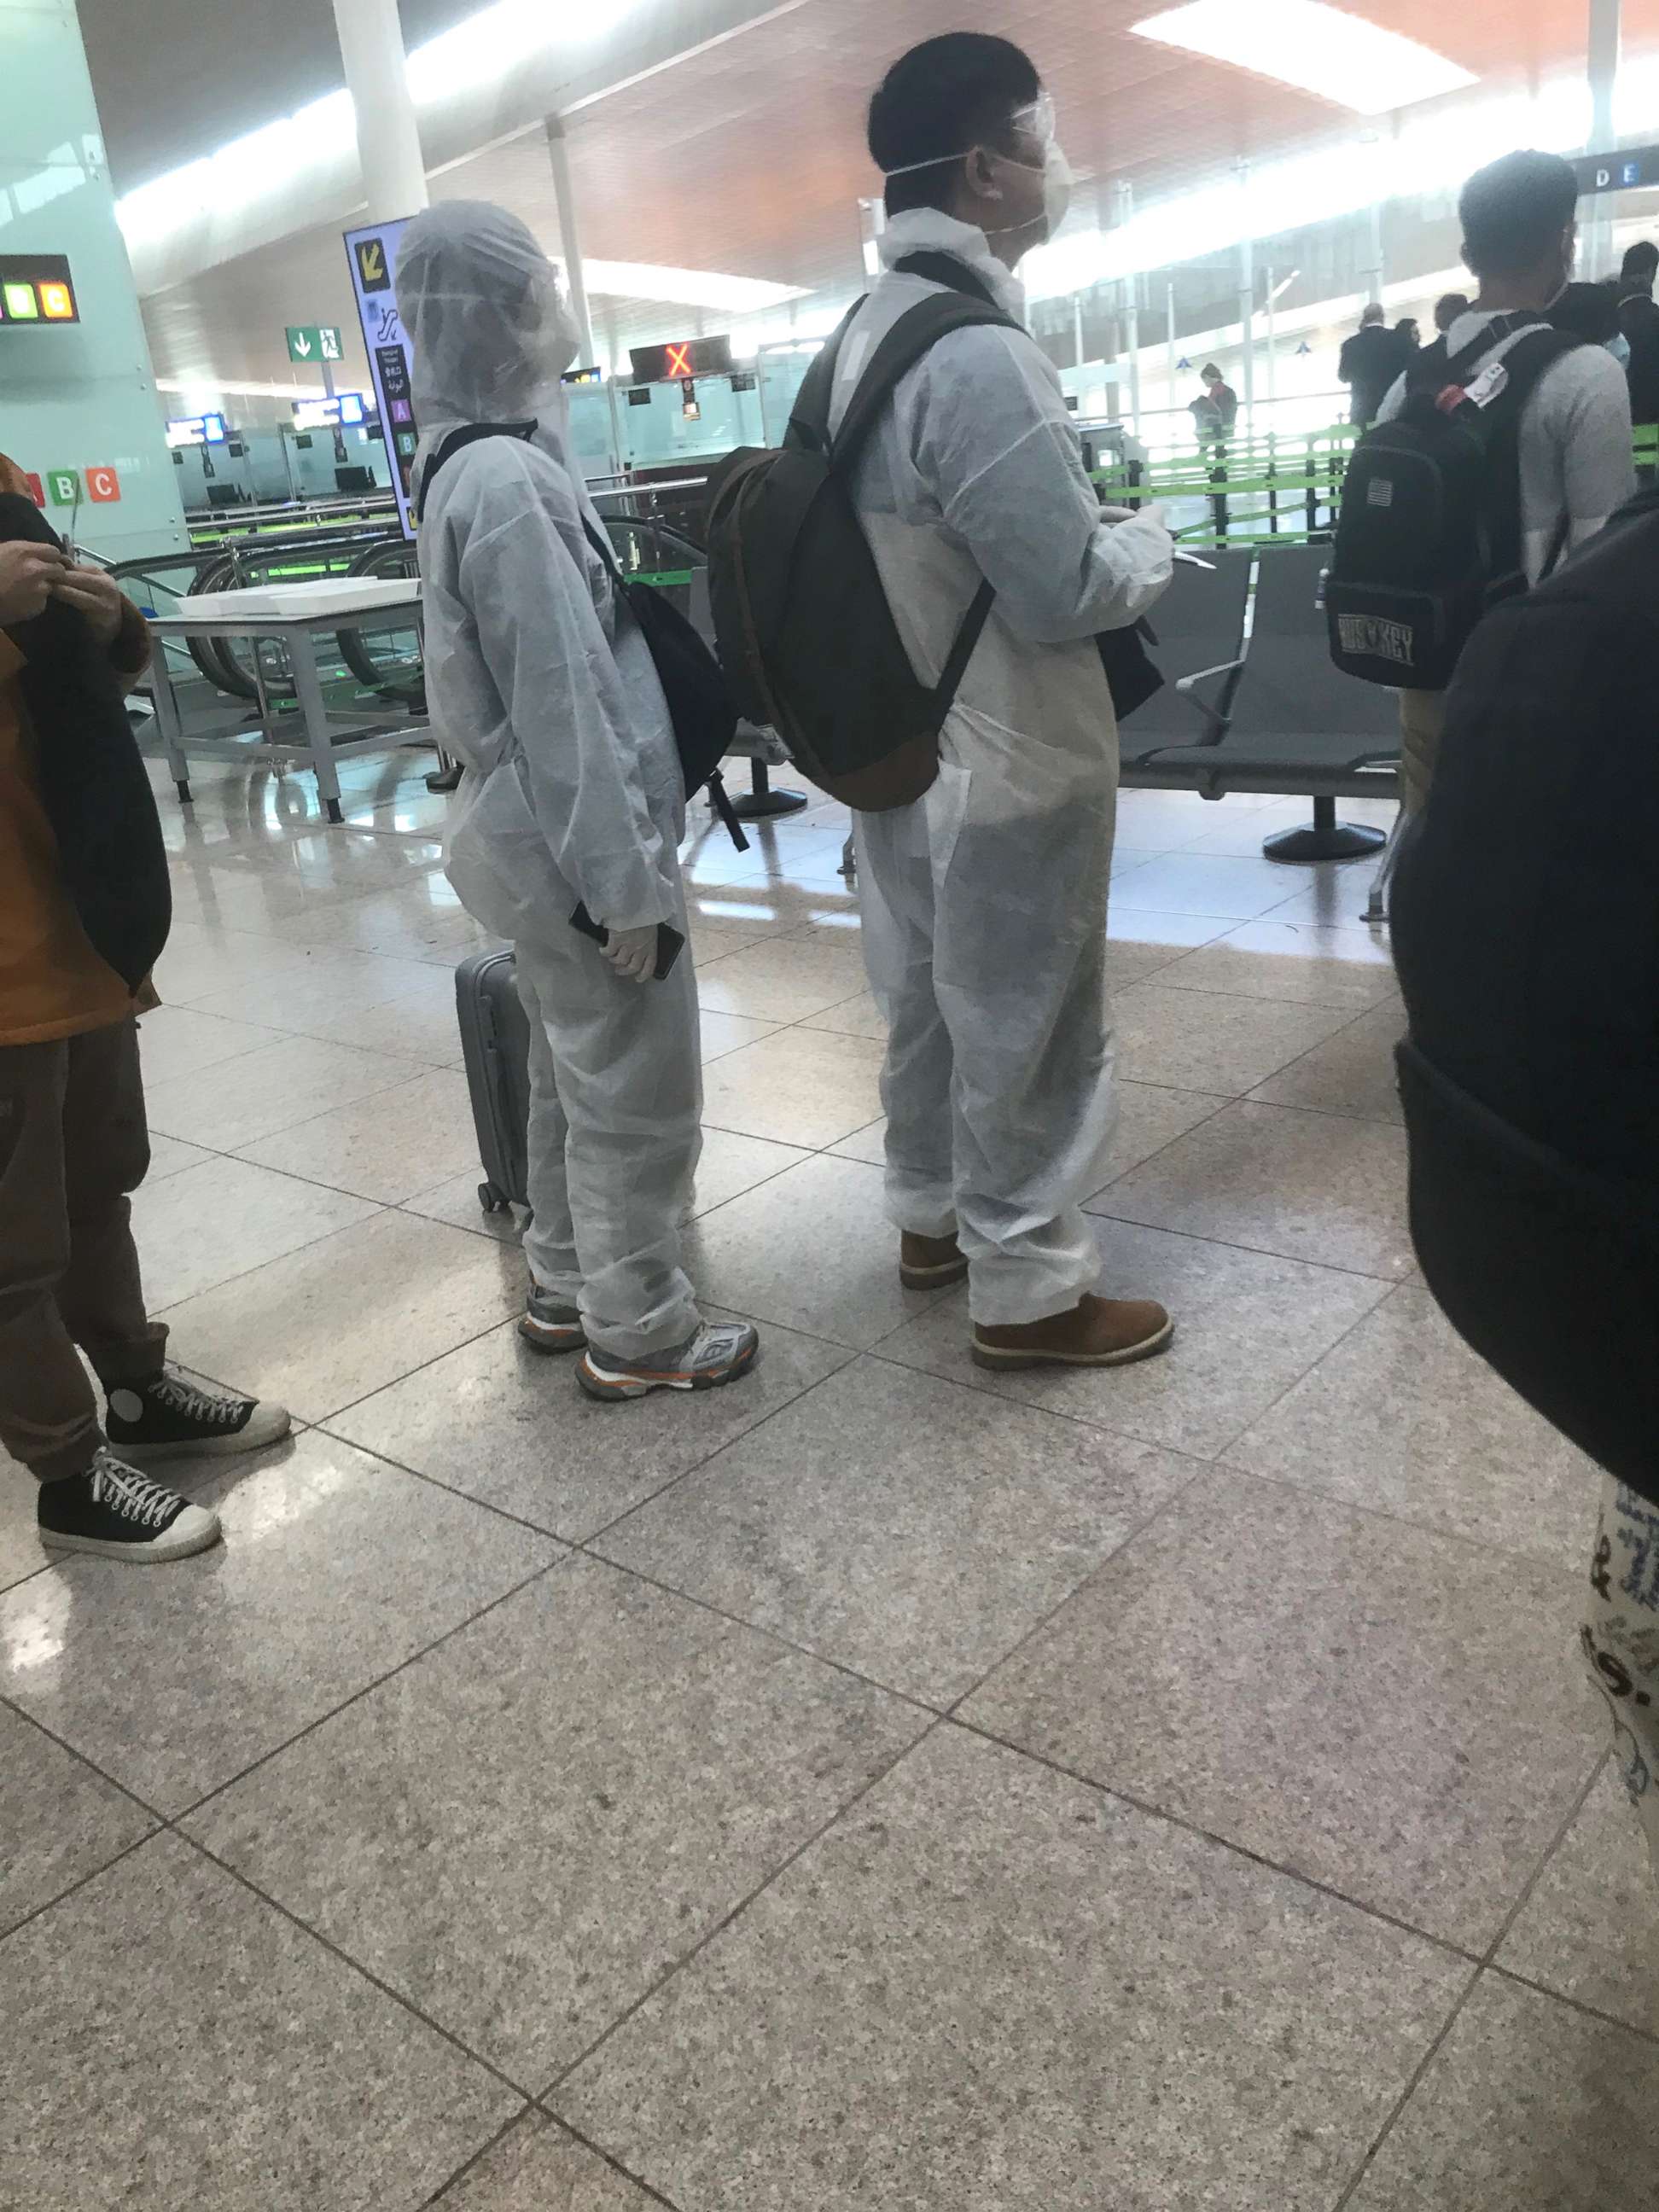 PHOTO: Passengers in the security line wearing hazmat suits at Josep Tarradellas Barcelona-El Prat Airport in Spain.